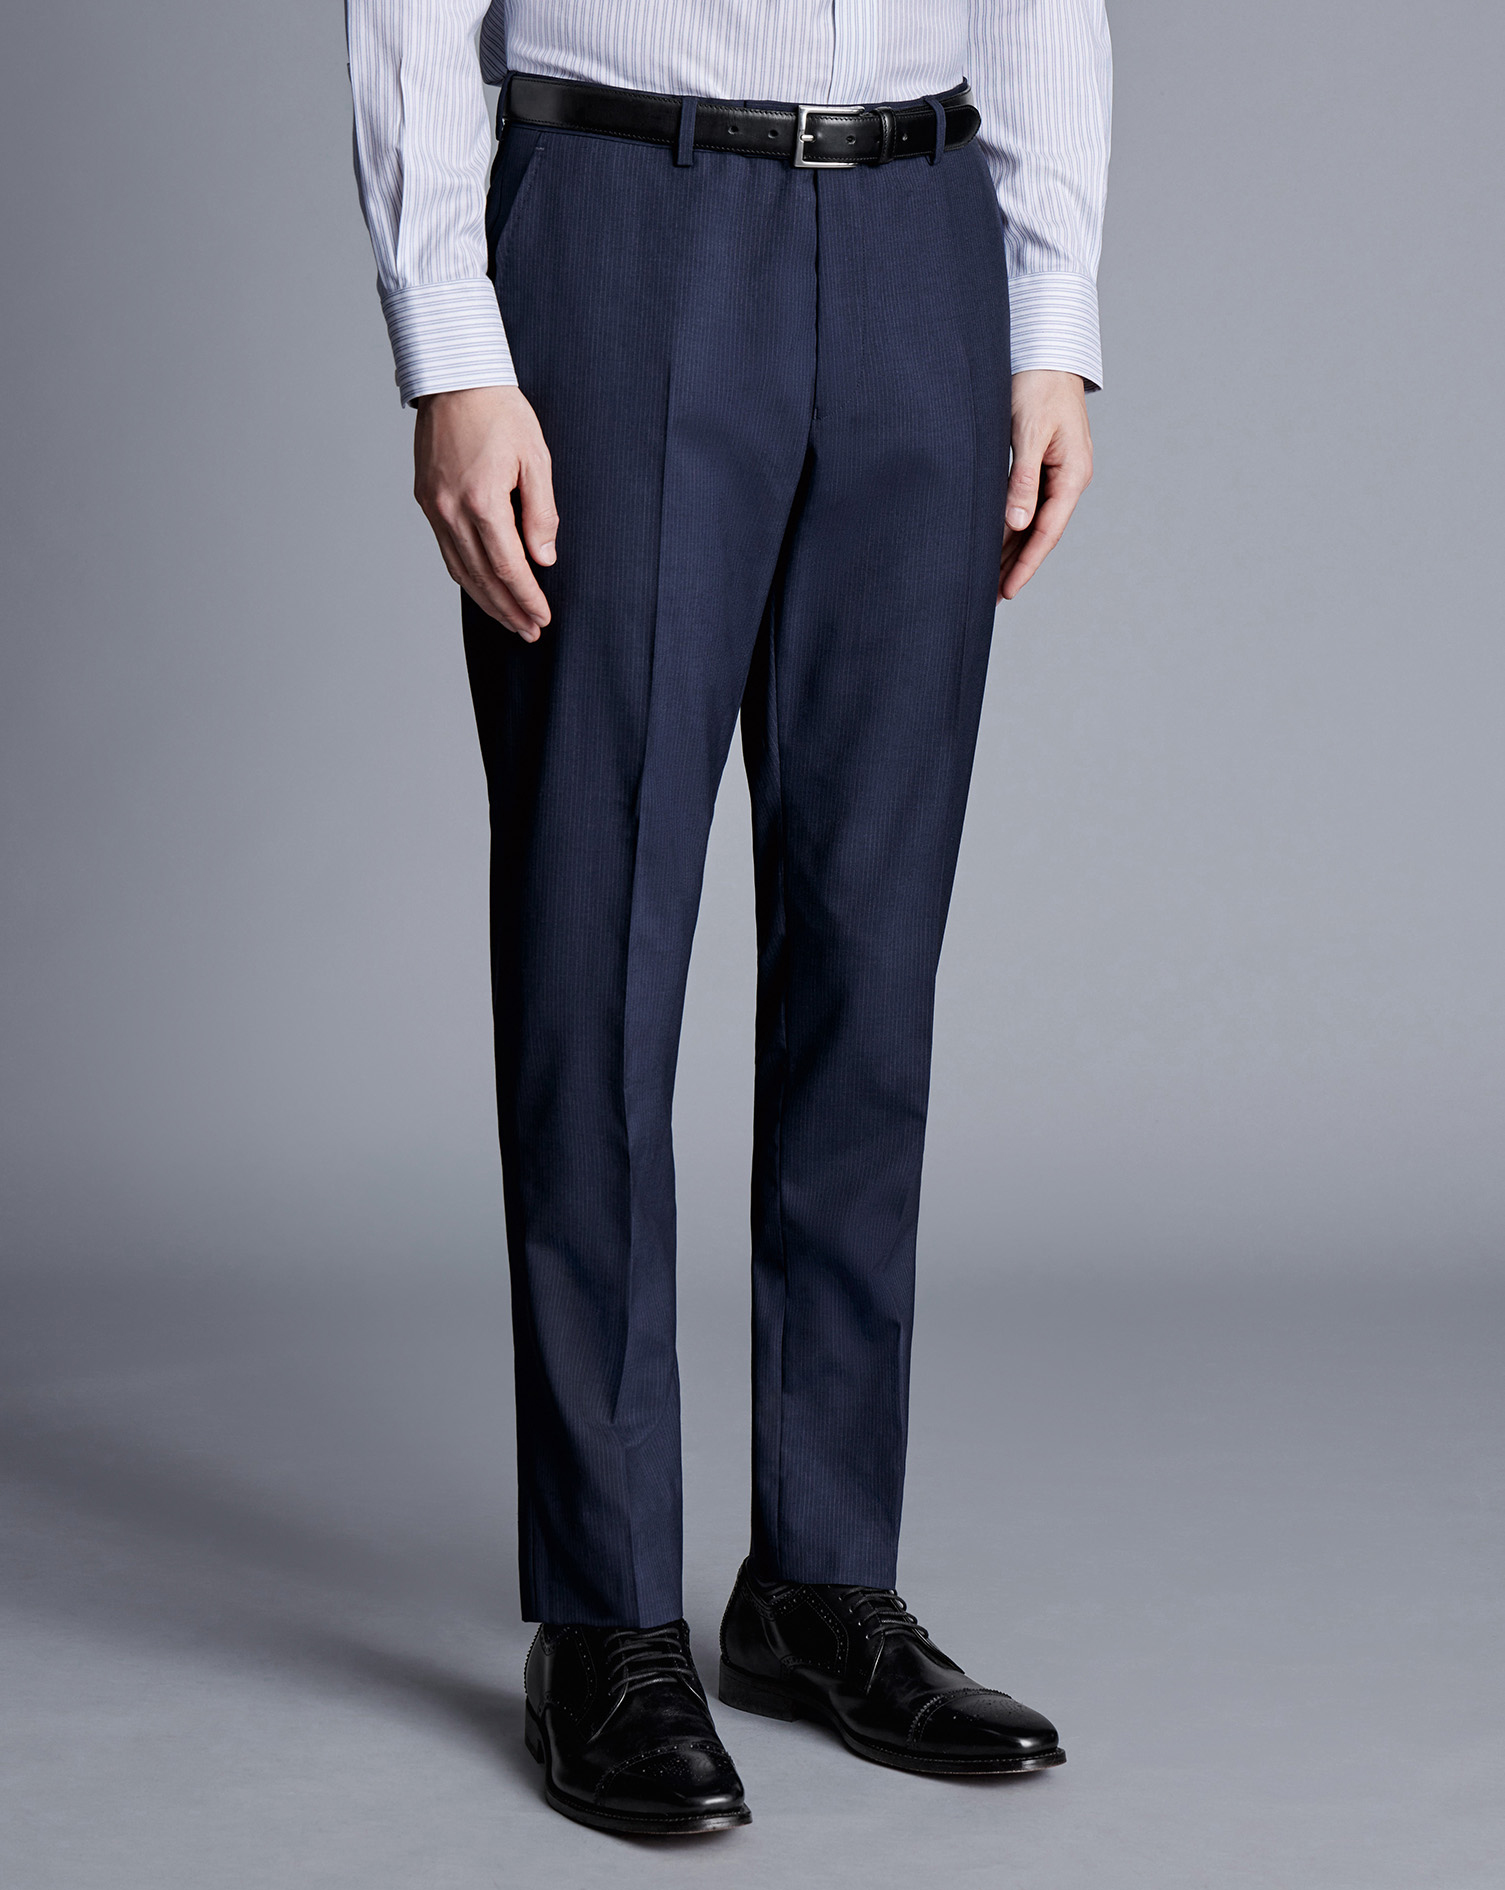 Men's Charles Tyrwhitt Stripe Suit Trousers - Navy Blue Size 40/38 Wool
